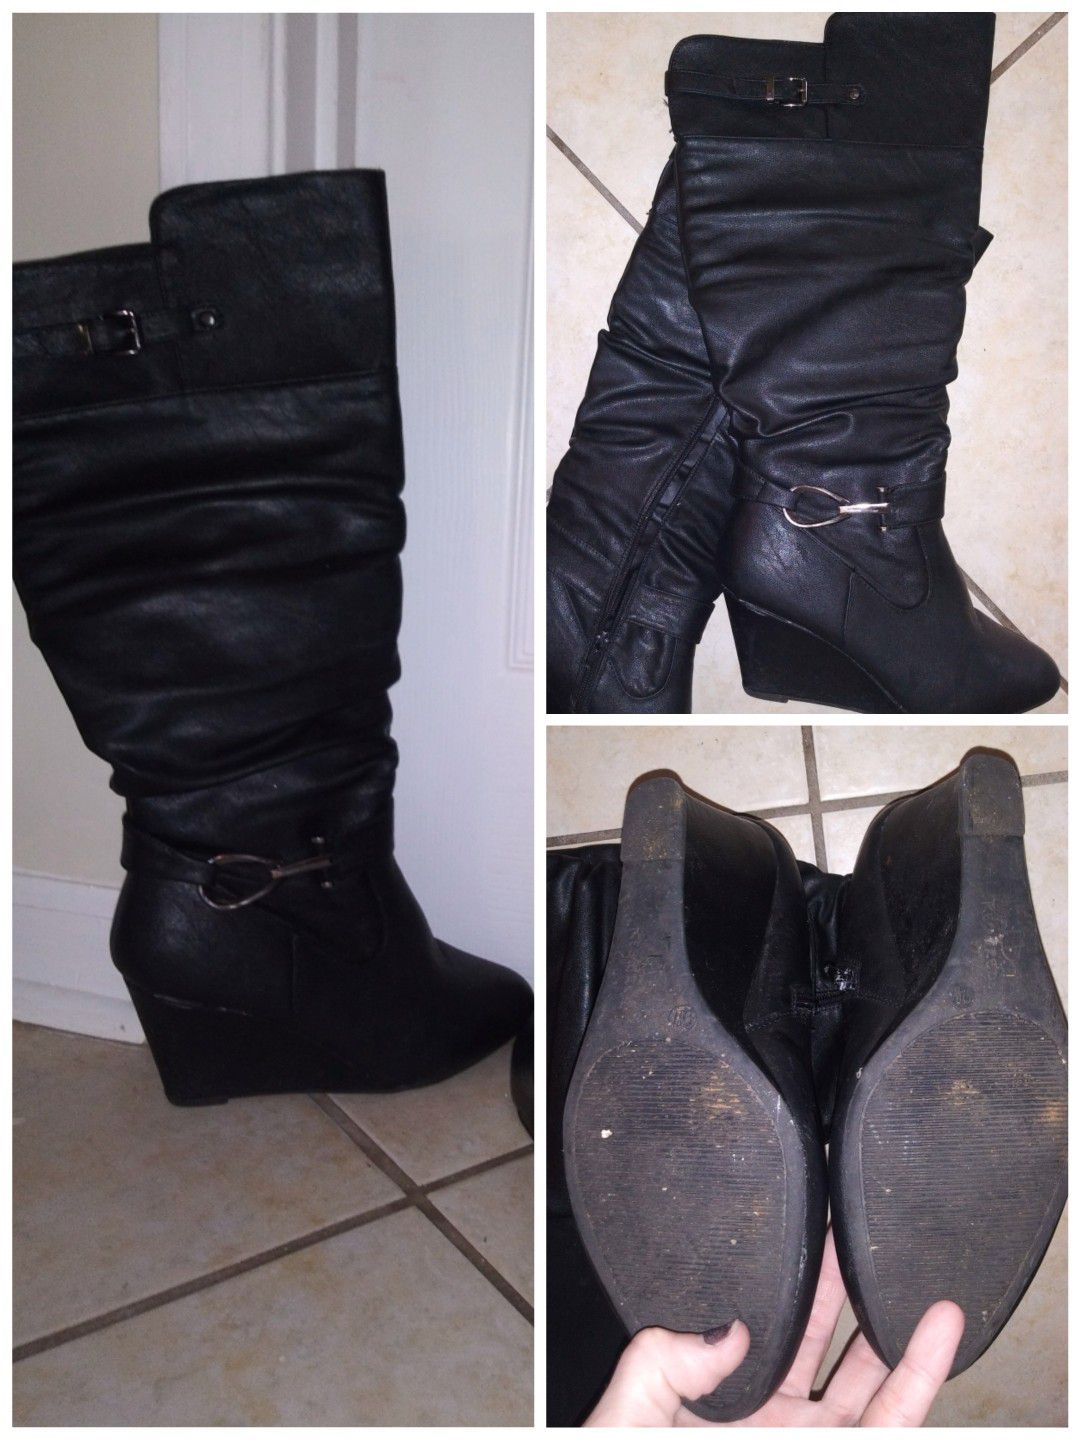 9 wide calf black knee high wedge boots $25